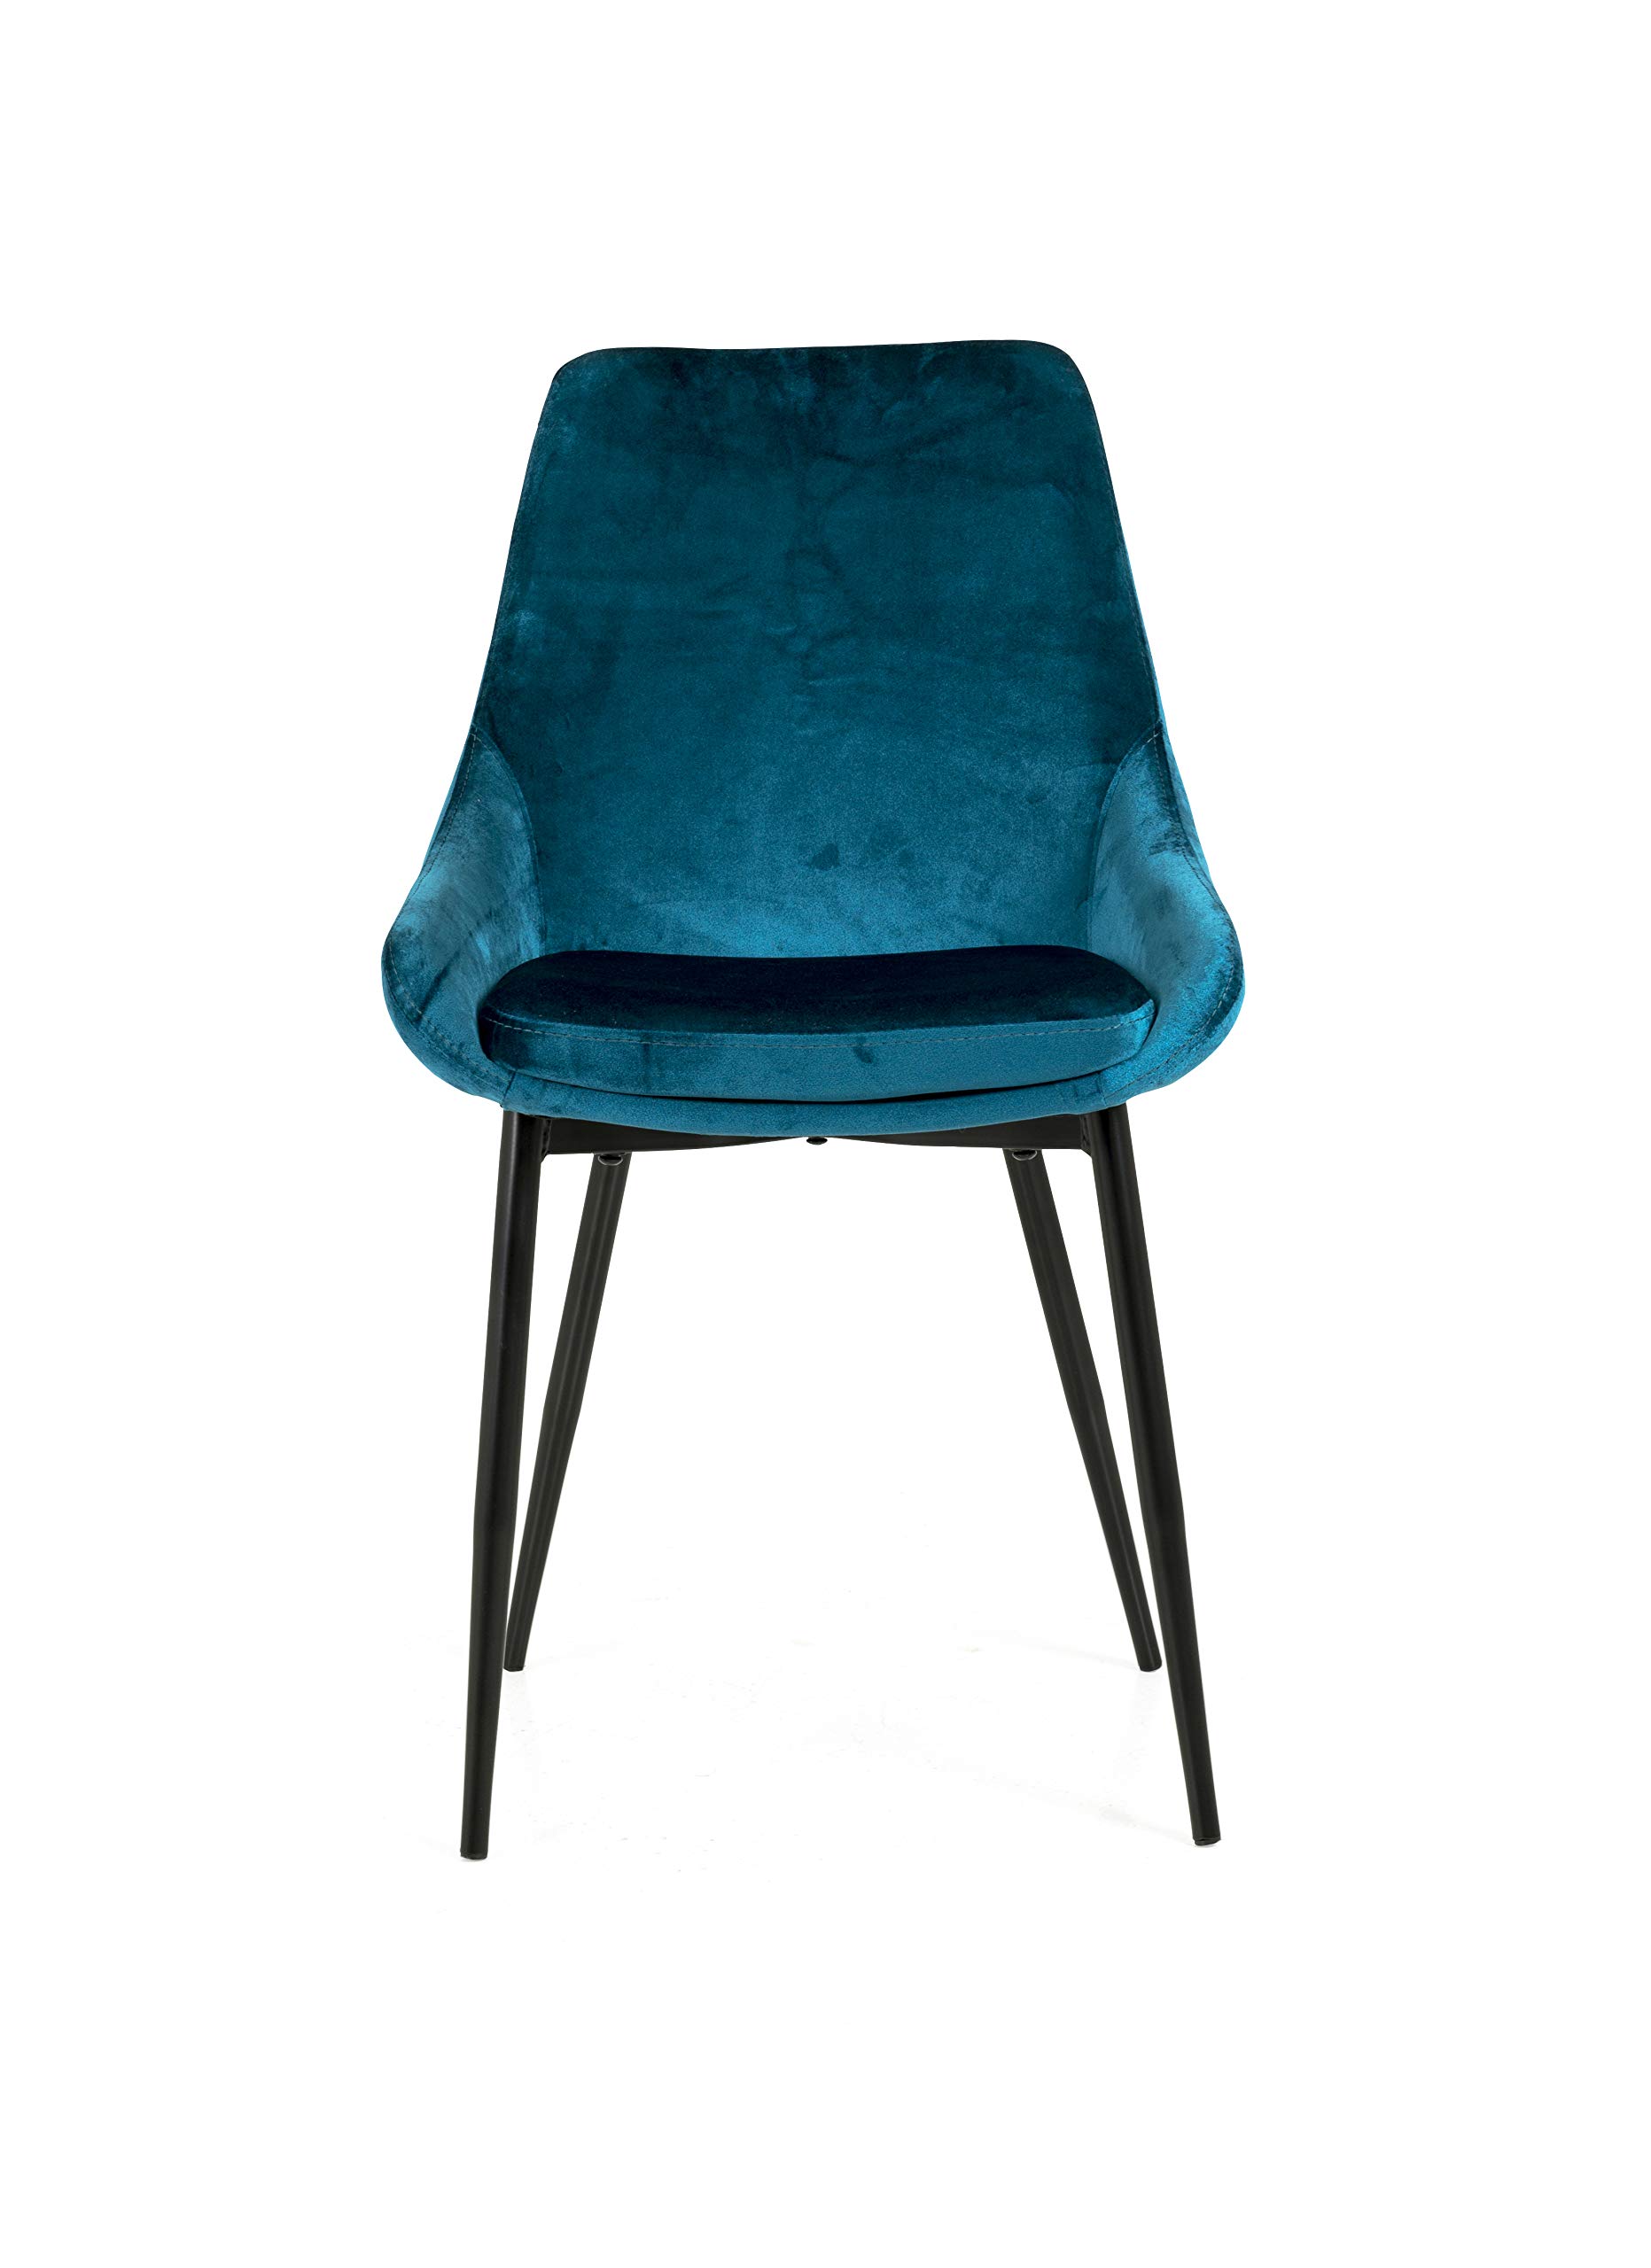 Tenzo Lex 2er-Set Designer Stühle, Metall, Petrol Blau, 85 x 47,5 x 56 cm (Hxbxt), Sitz : Stahl mit Schaum. Stoff : 100% Samt, Petrol Blau/Schwarz, Samtsitz